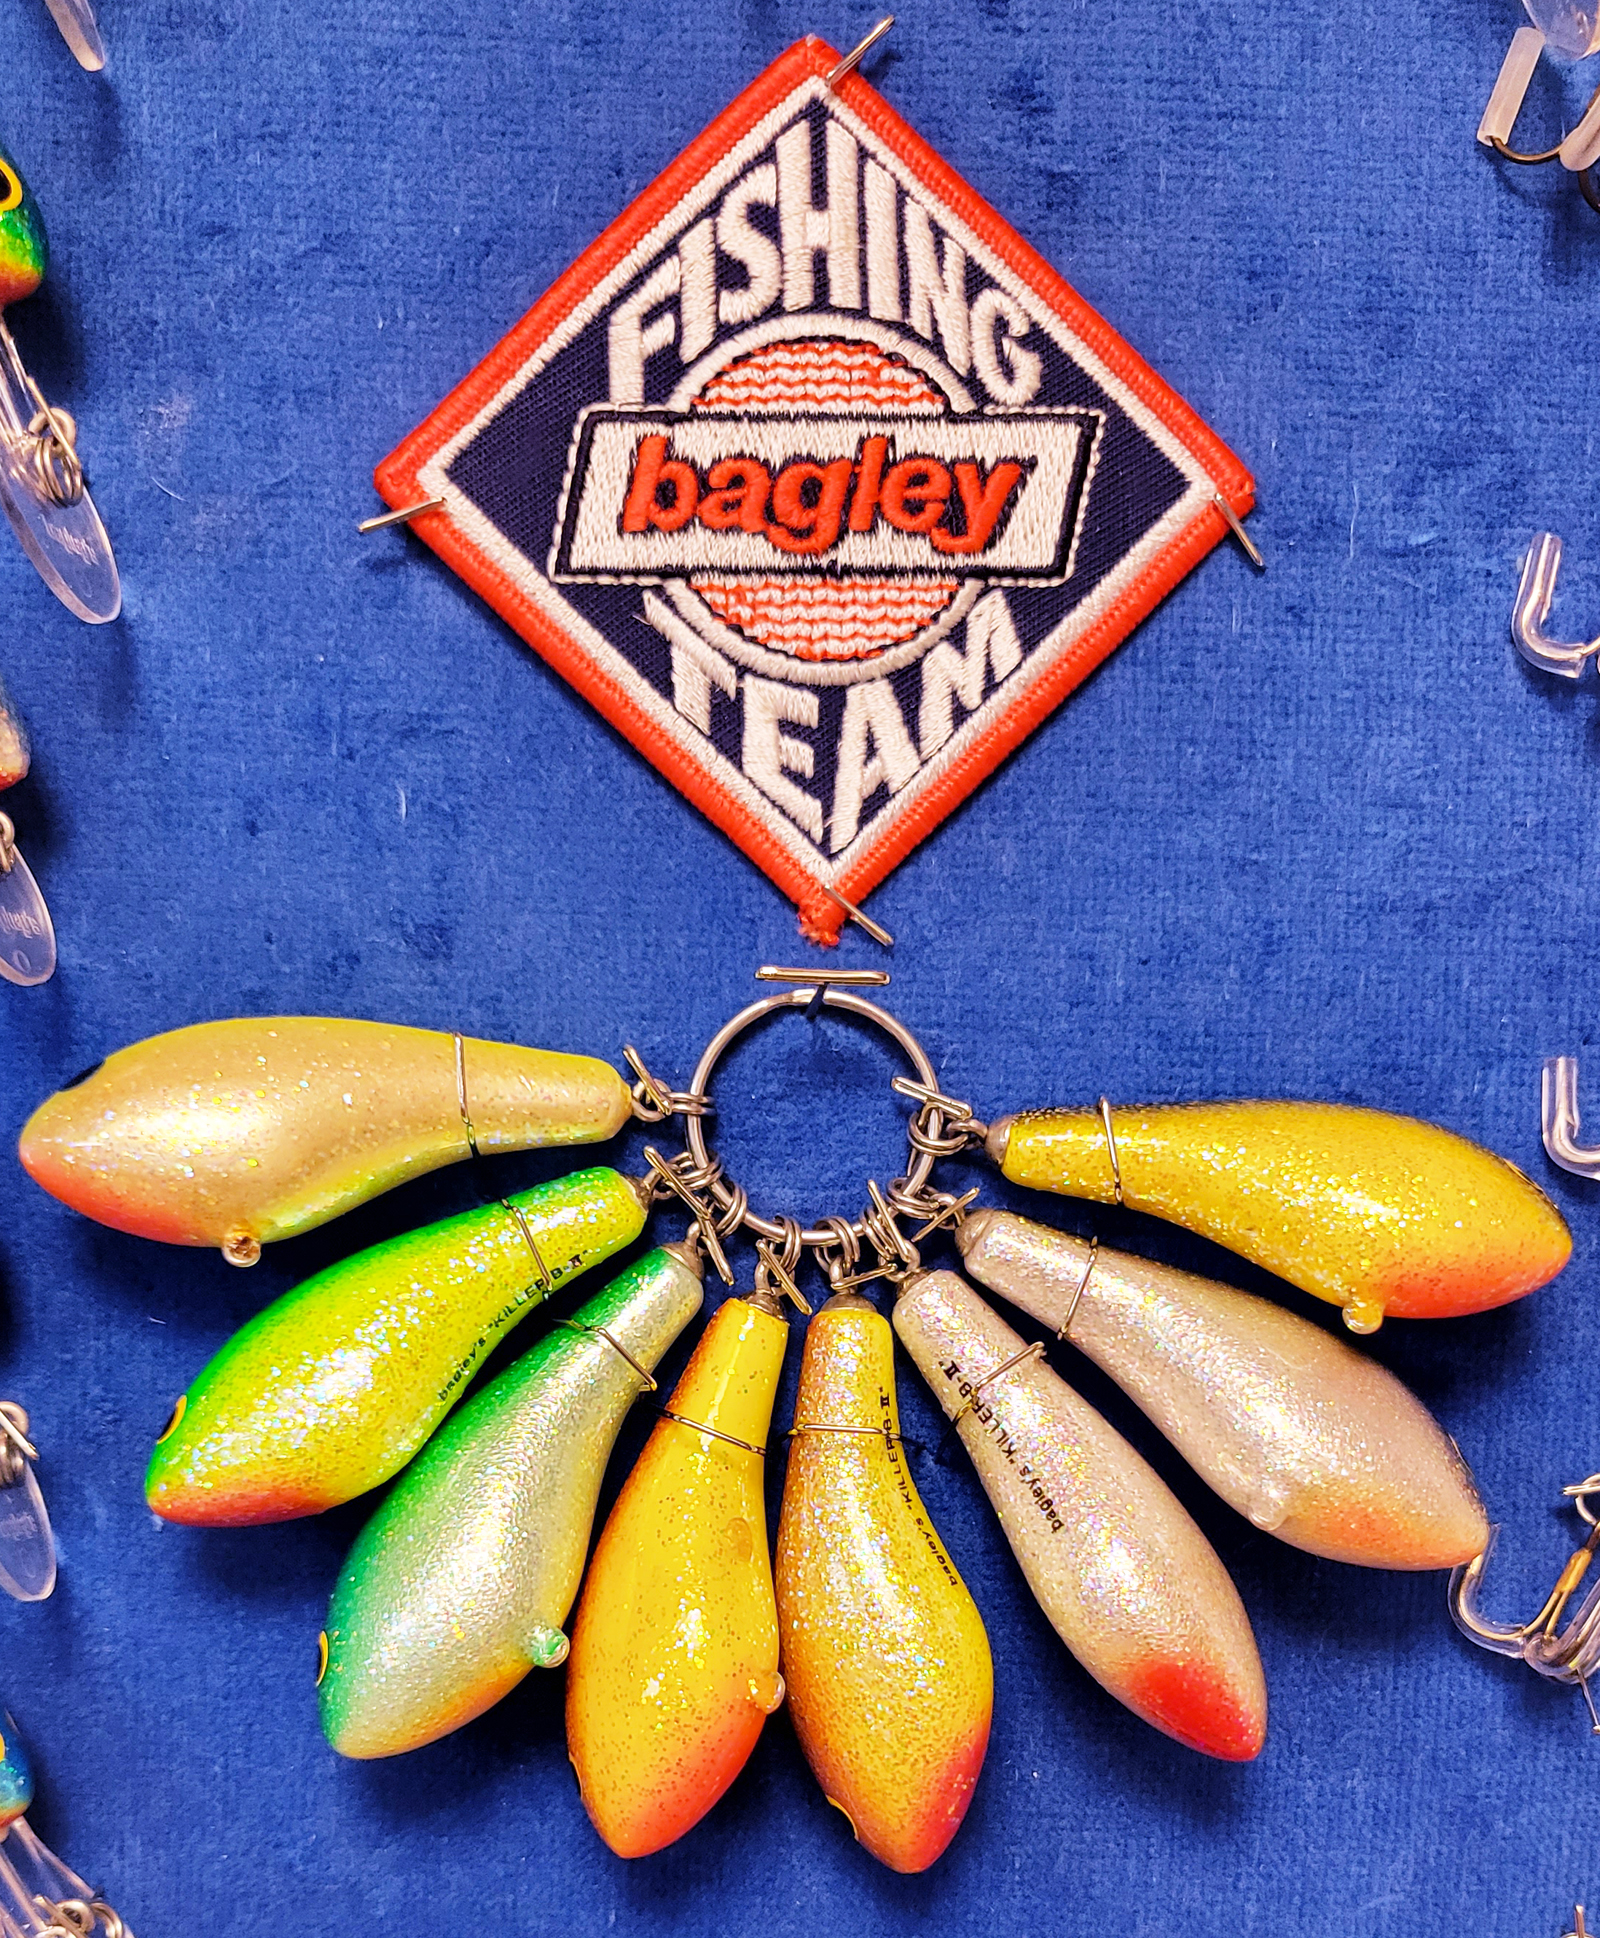 Bagley Pro Sunny B - Orange Belly Gill - 1/2 oz - 3 Fishing Lure